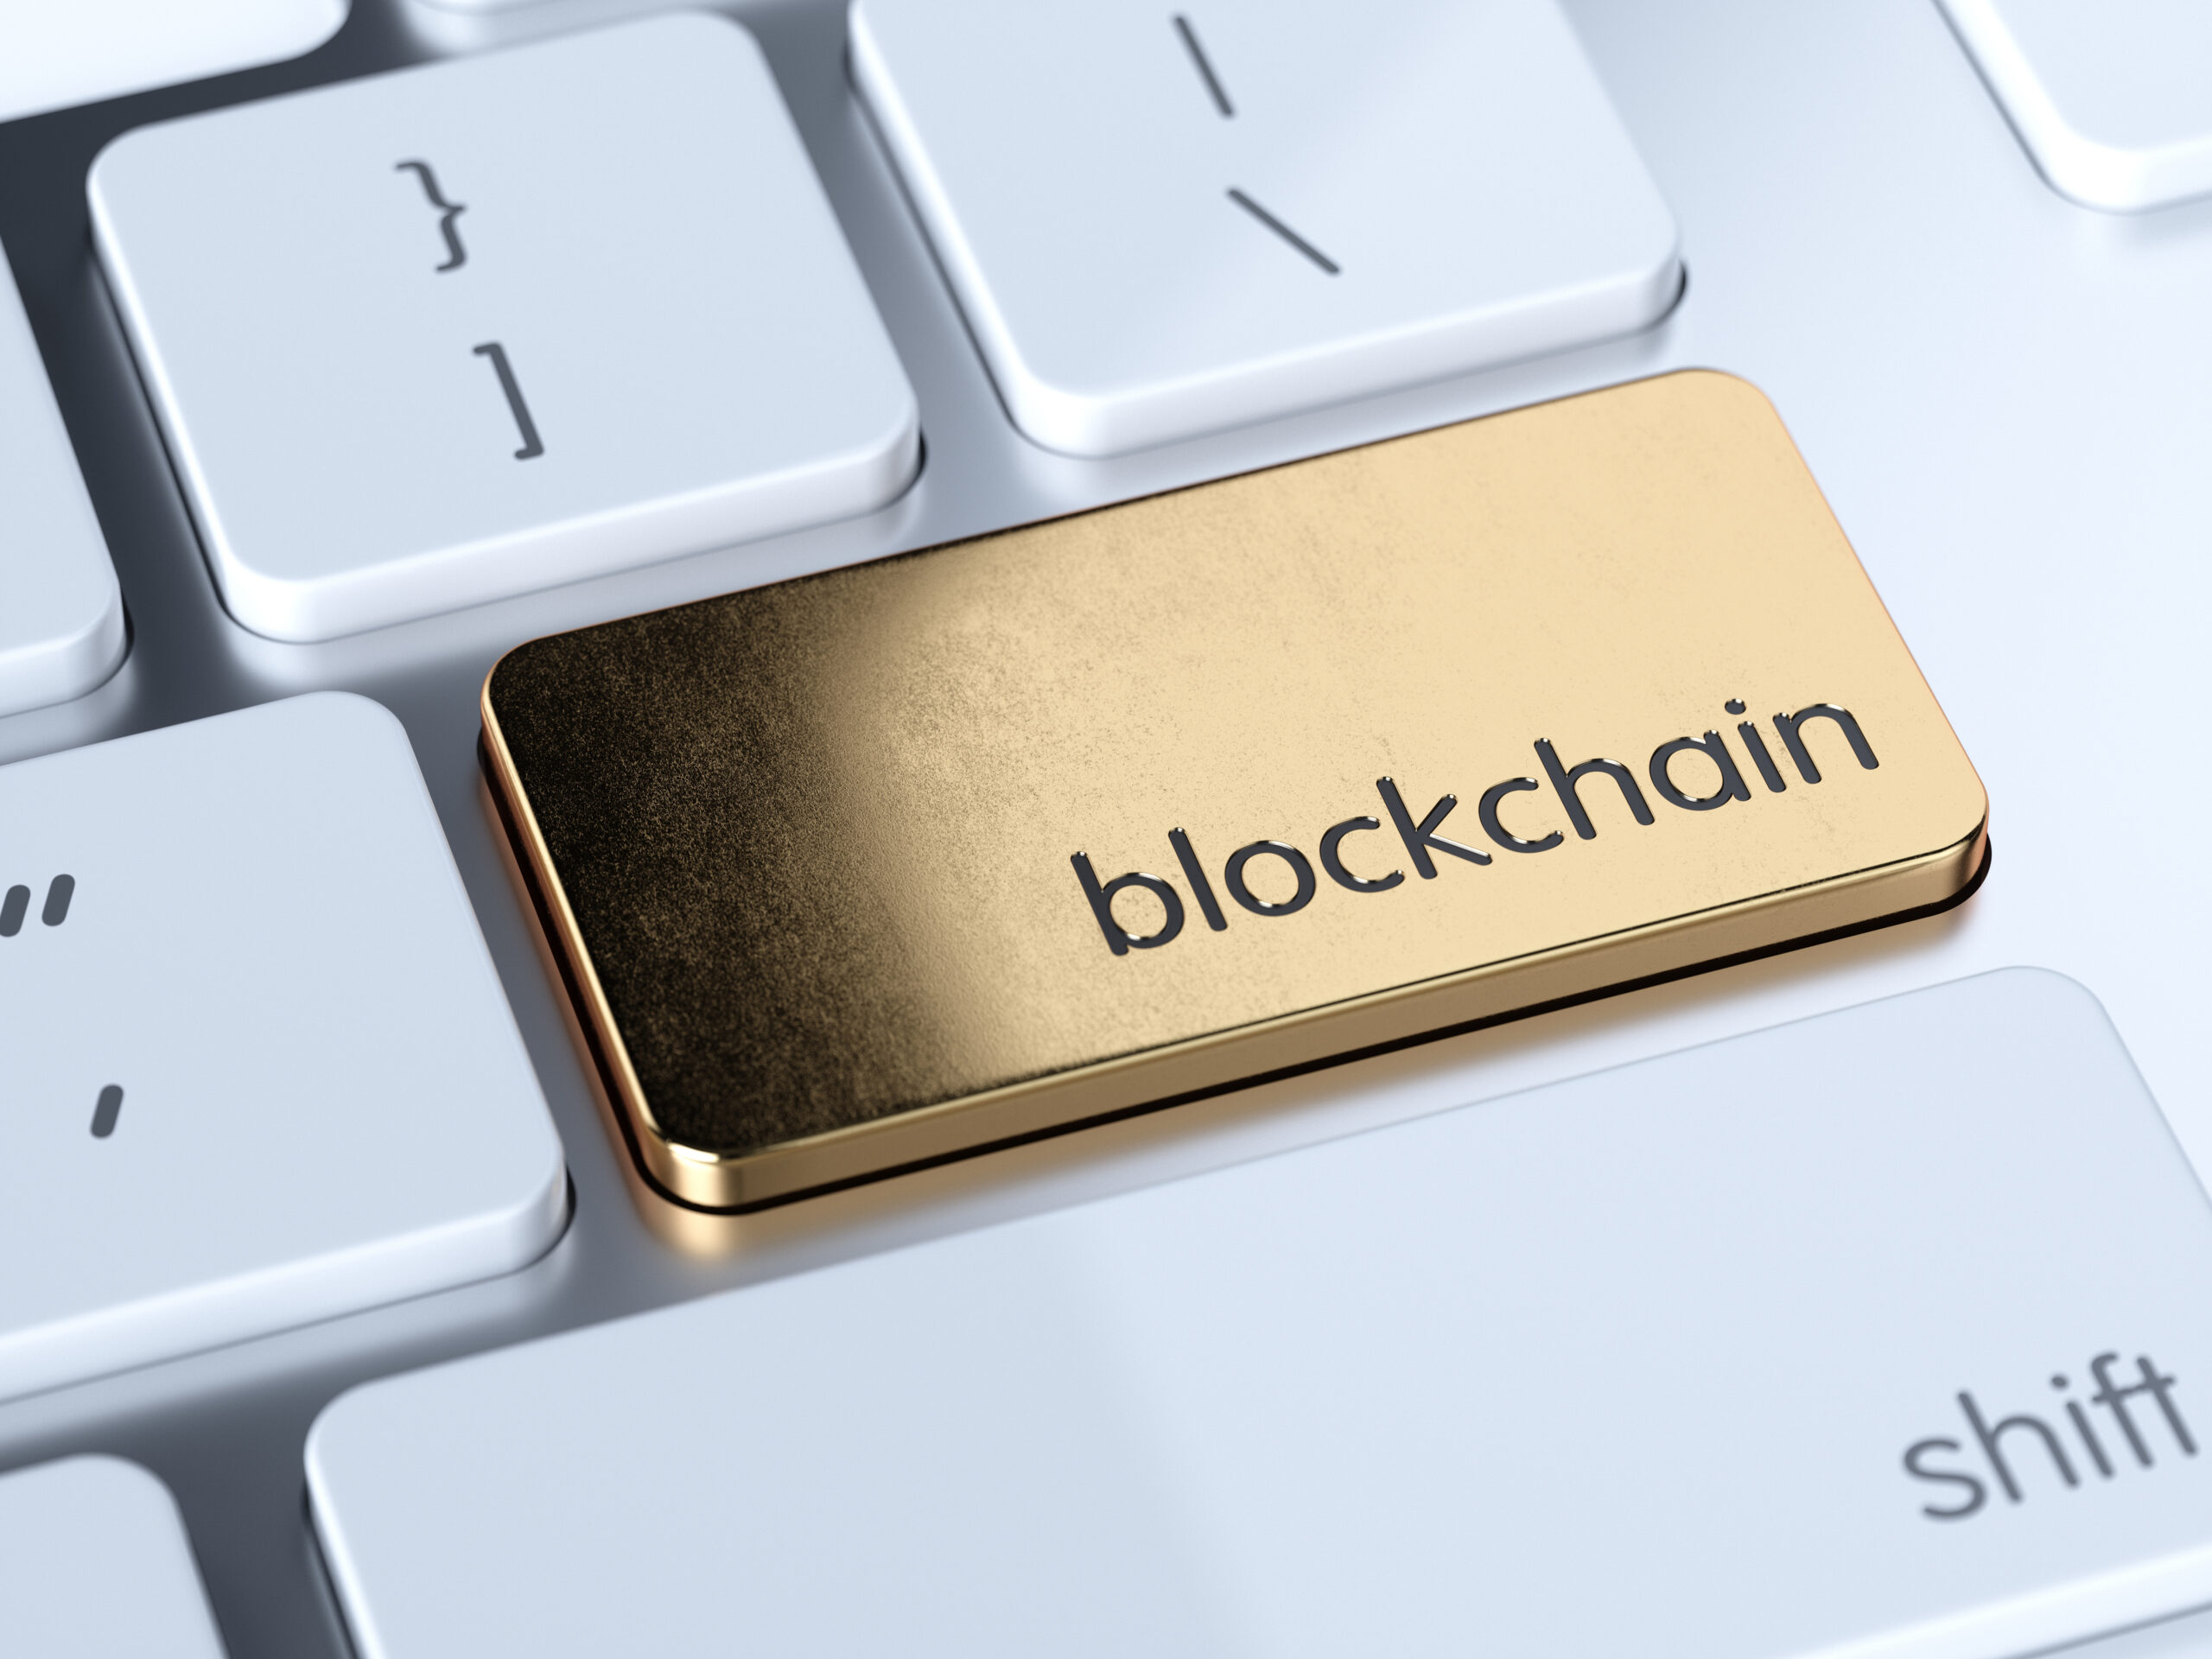 Blockchain. Pic: Shutterstock